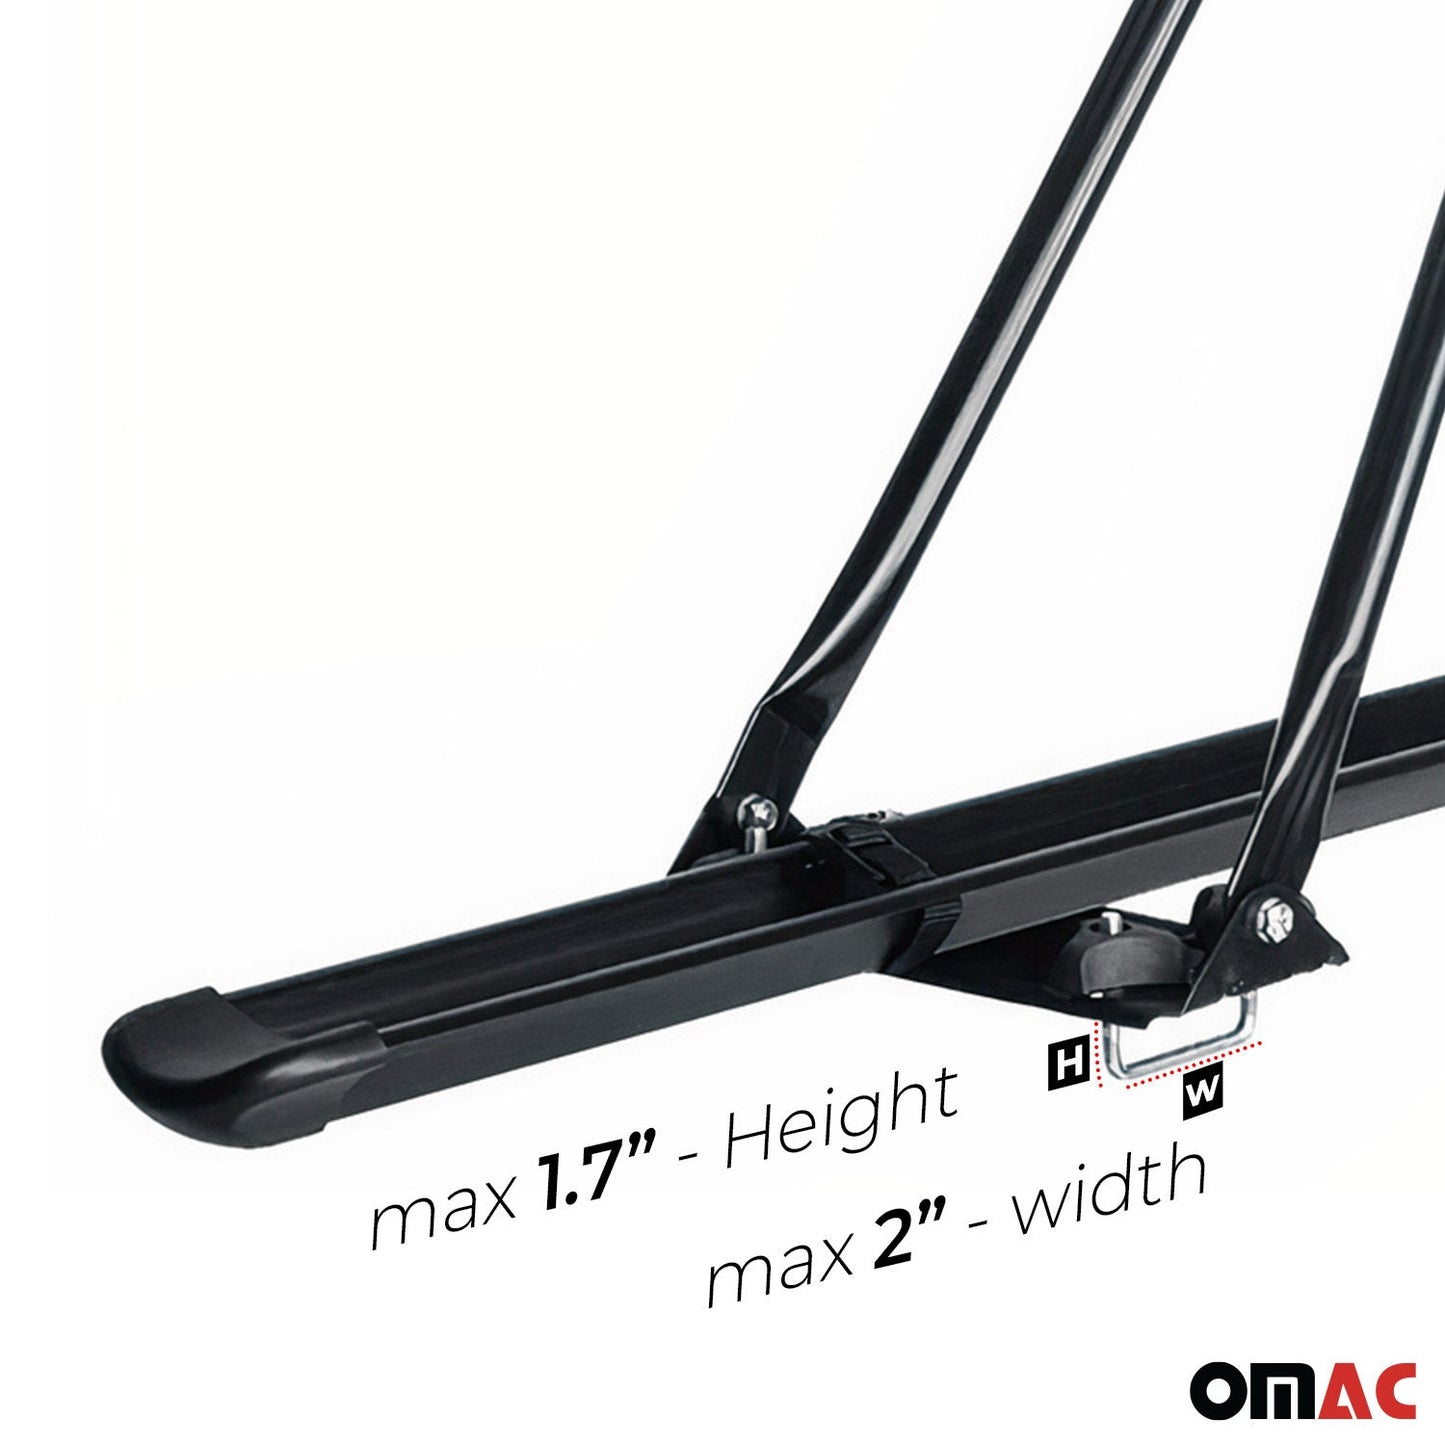 OMAC Bike Rack Carrier Roof Racks Set fits Honda Pilot 2003-2008 Black 3x U020650